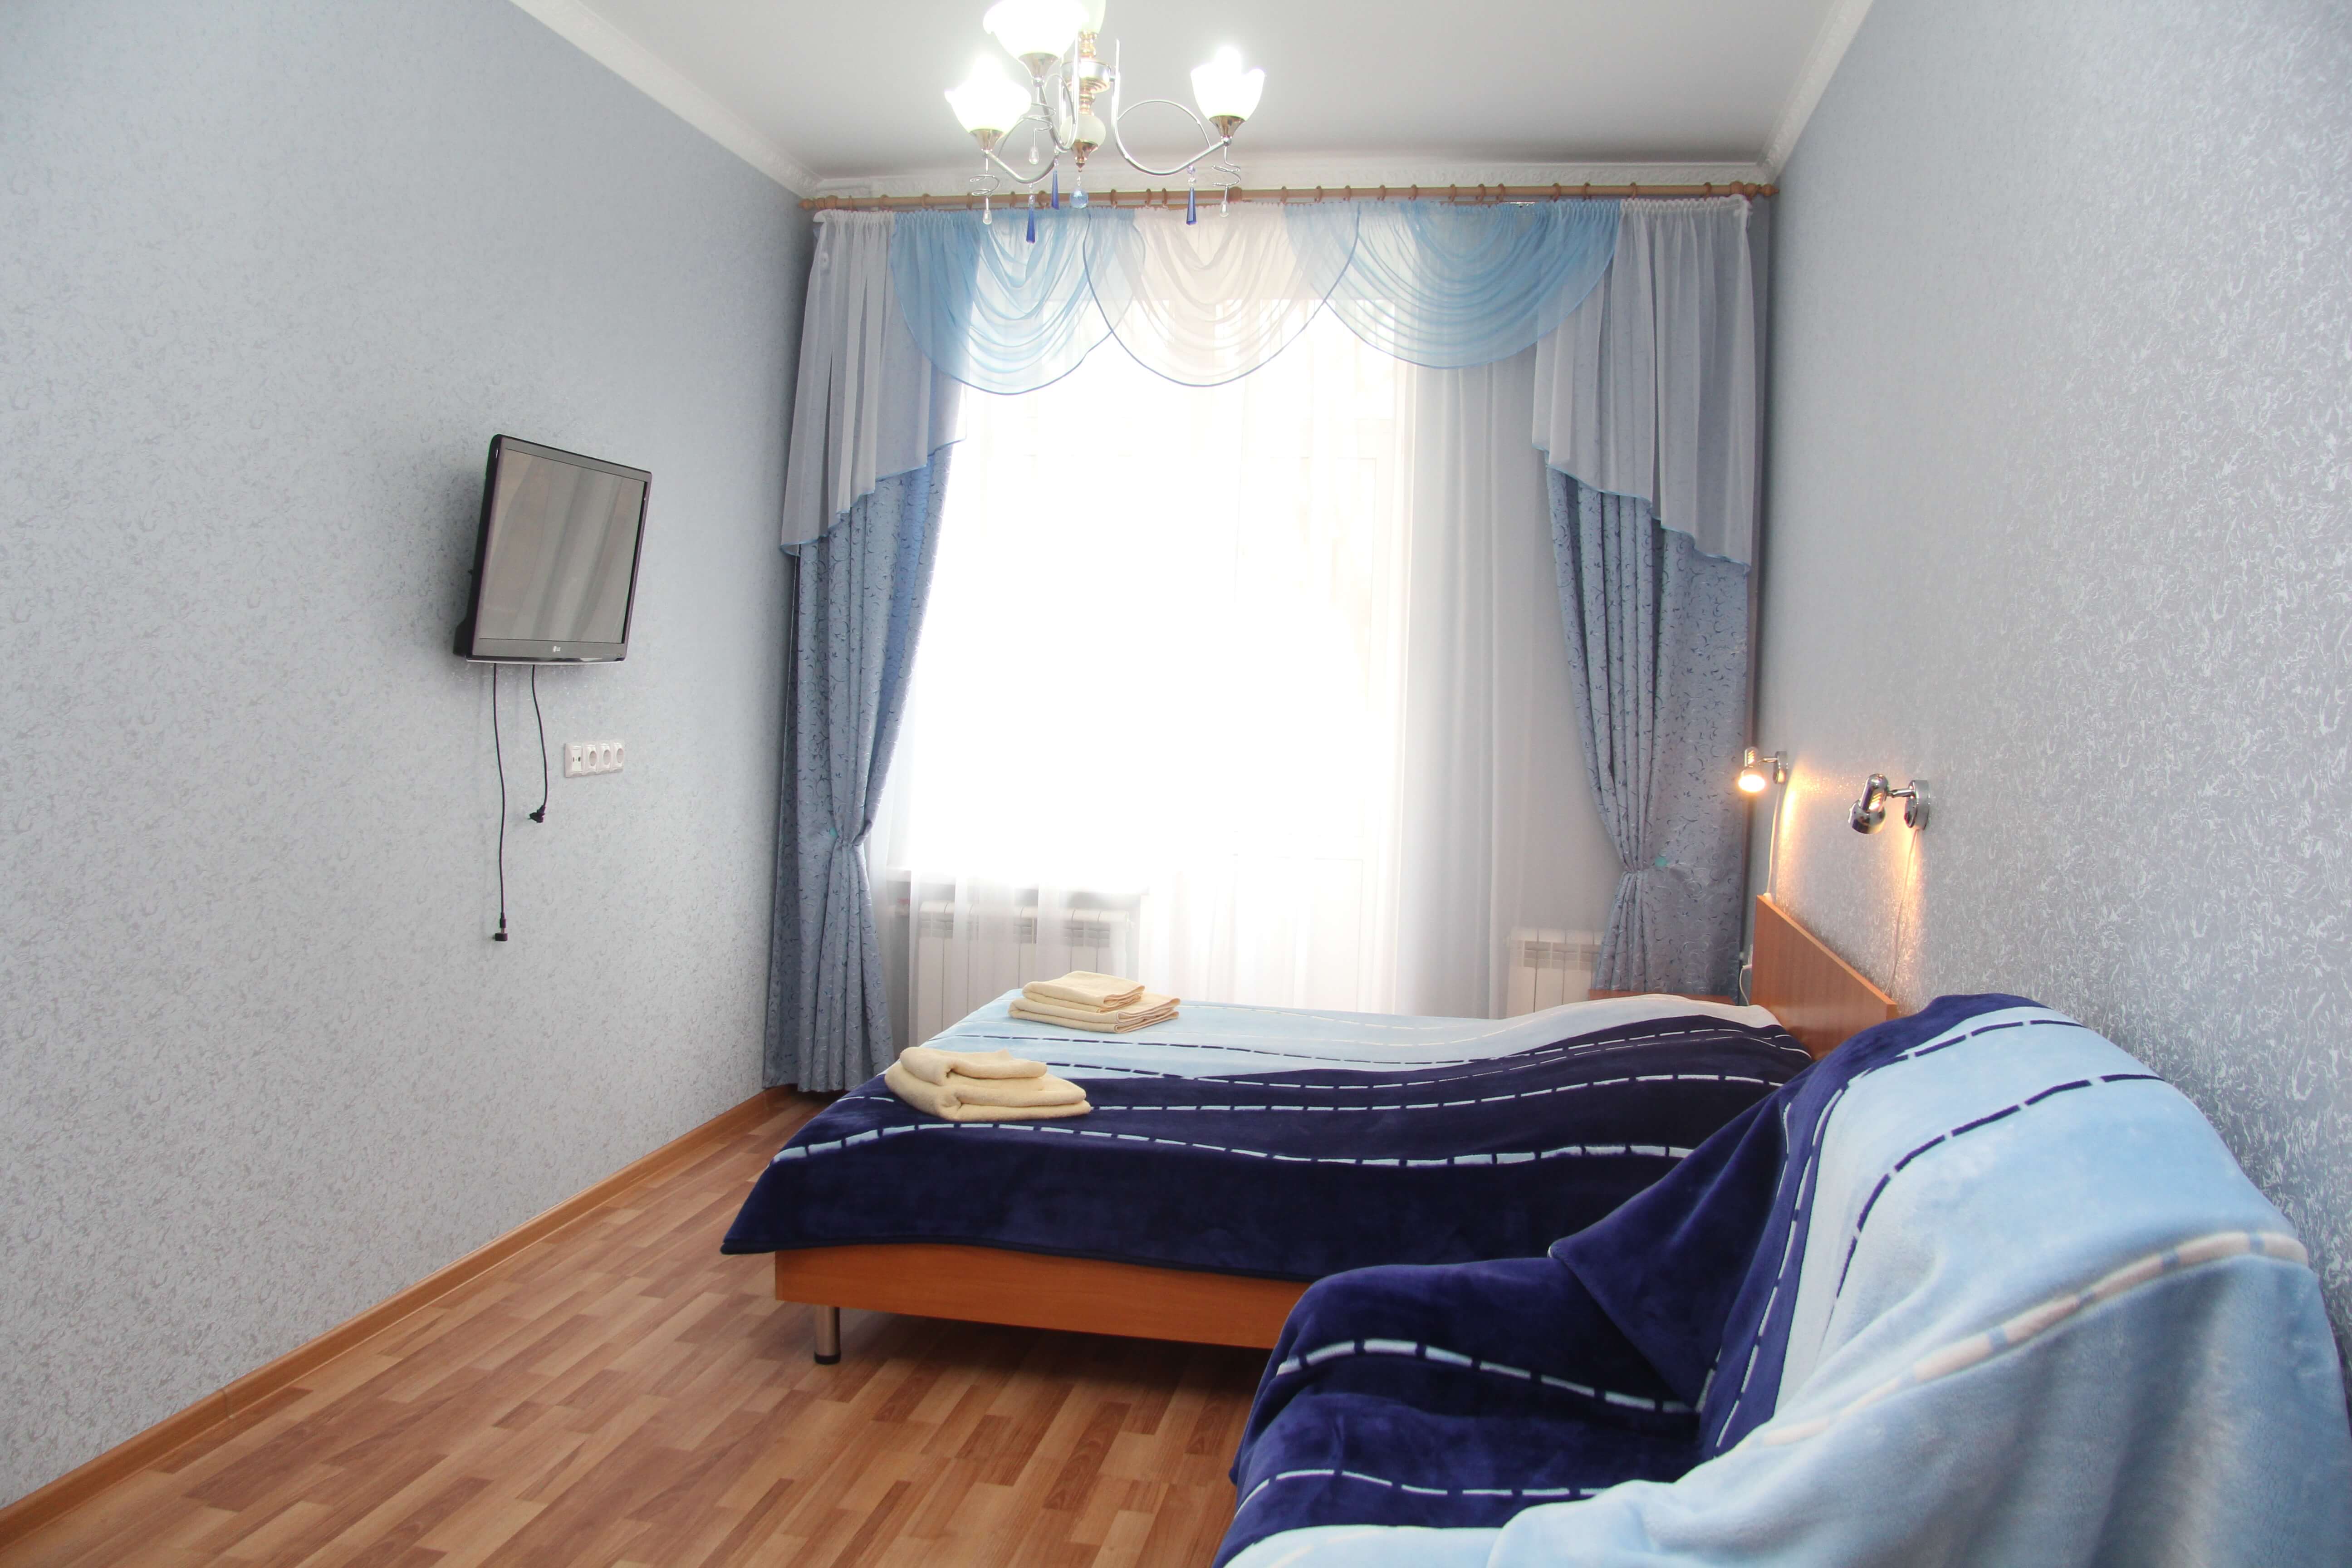 Однокомнатная квартира на пр.Лиговский 109 (45кв.м) до 4 гостей